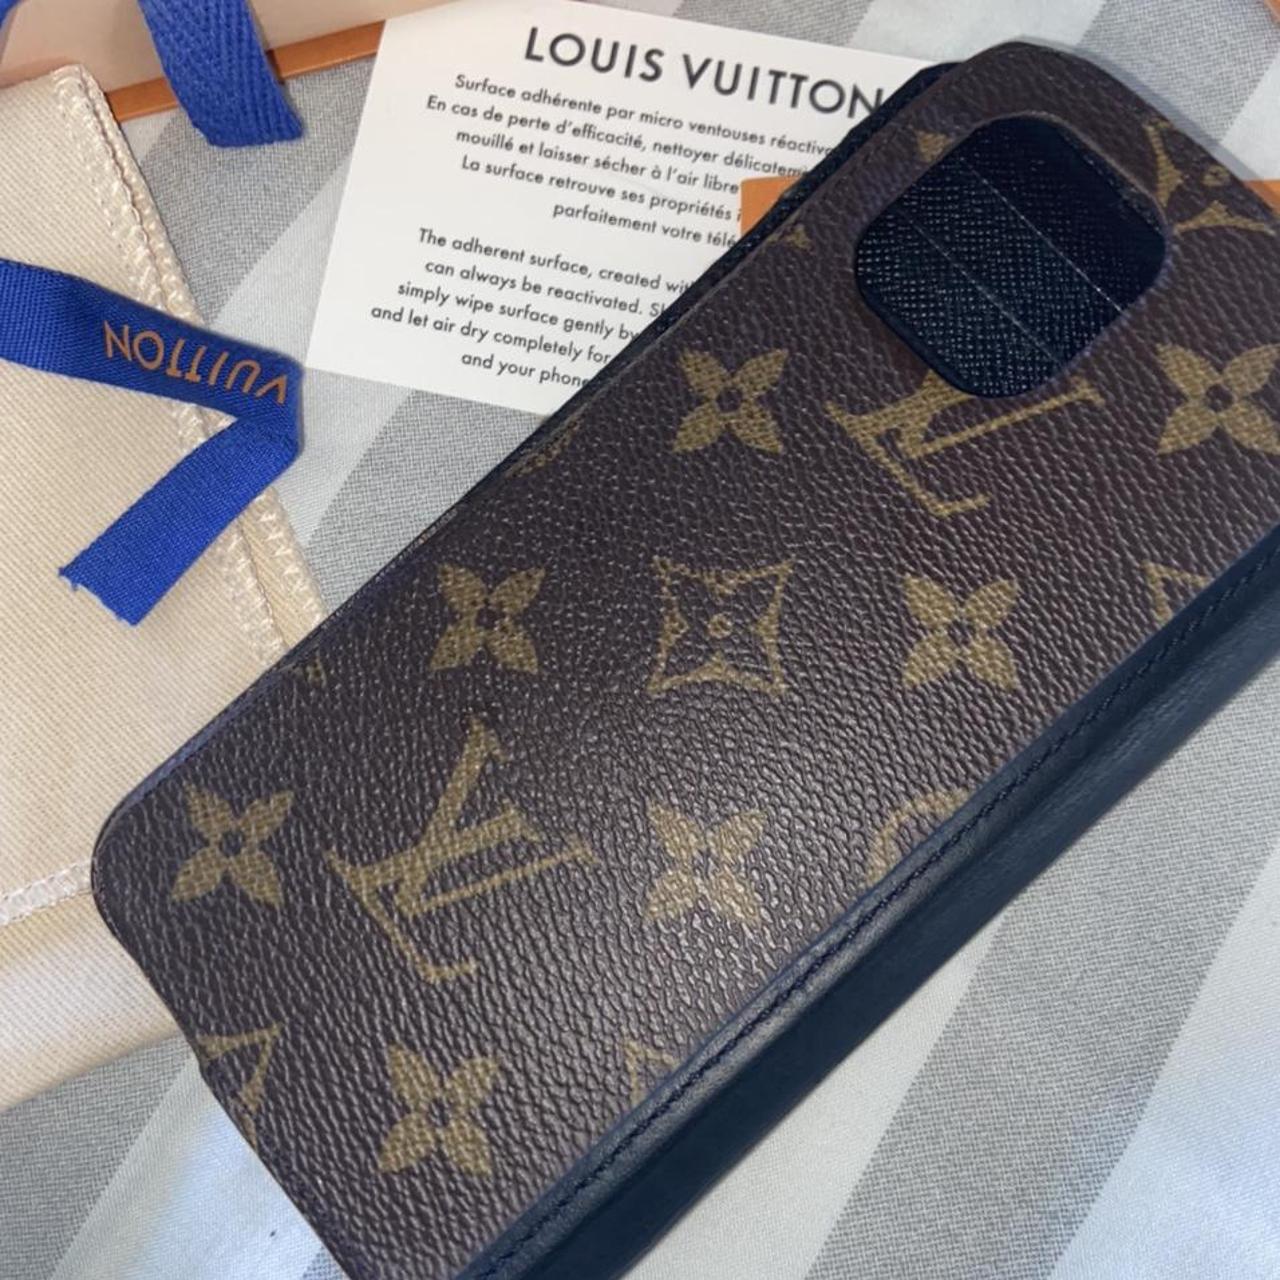 iPhone 11 louis Vuitton phone case the case can - Depop